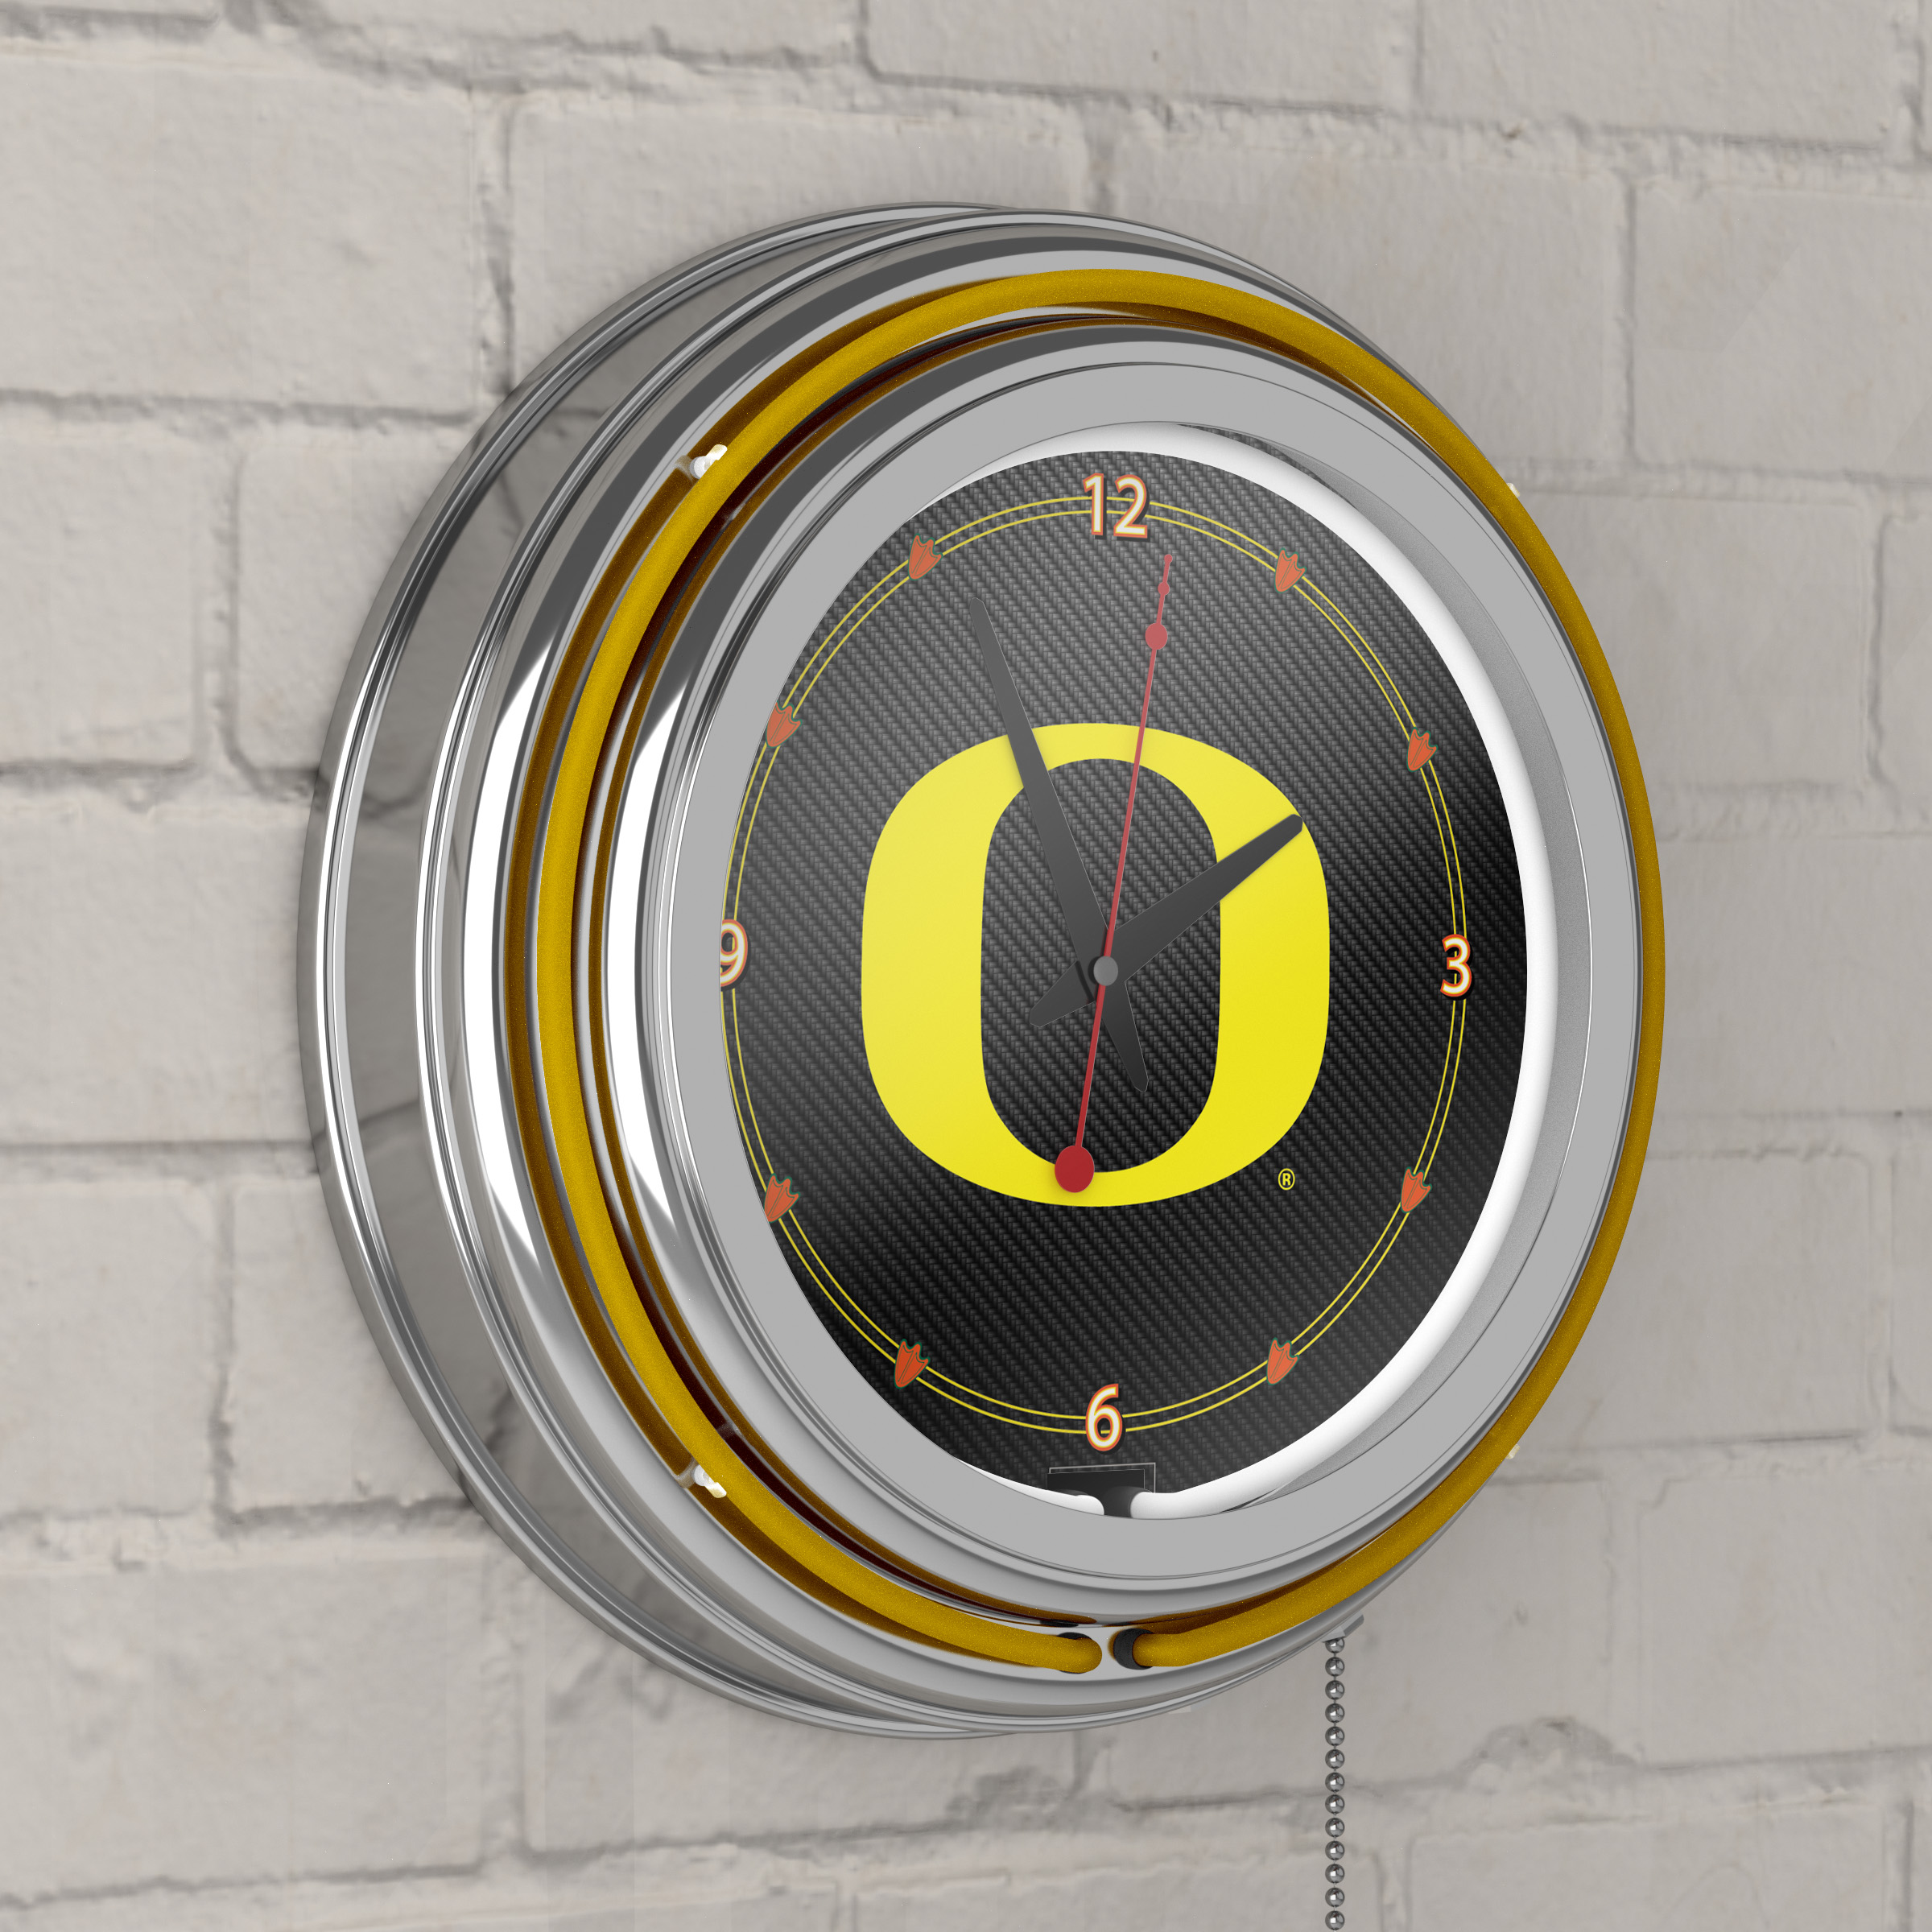 University of Oregon Chrome Double Rung Neon Clock - Carbon Fiber - image 5 of 6